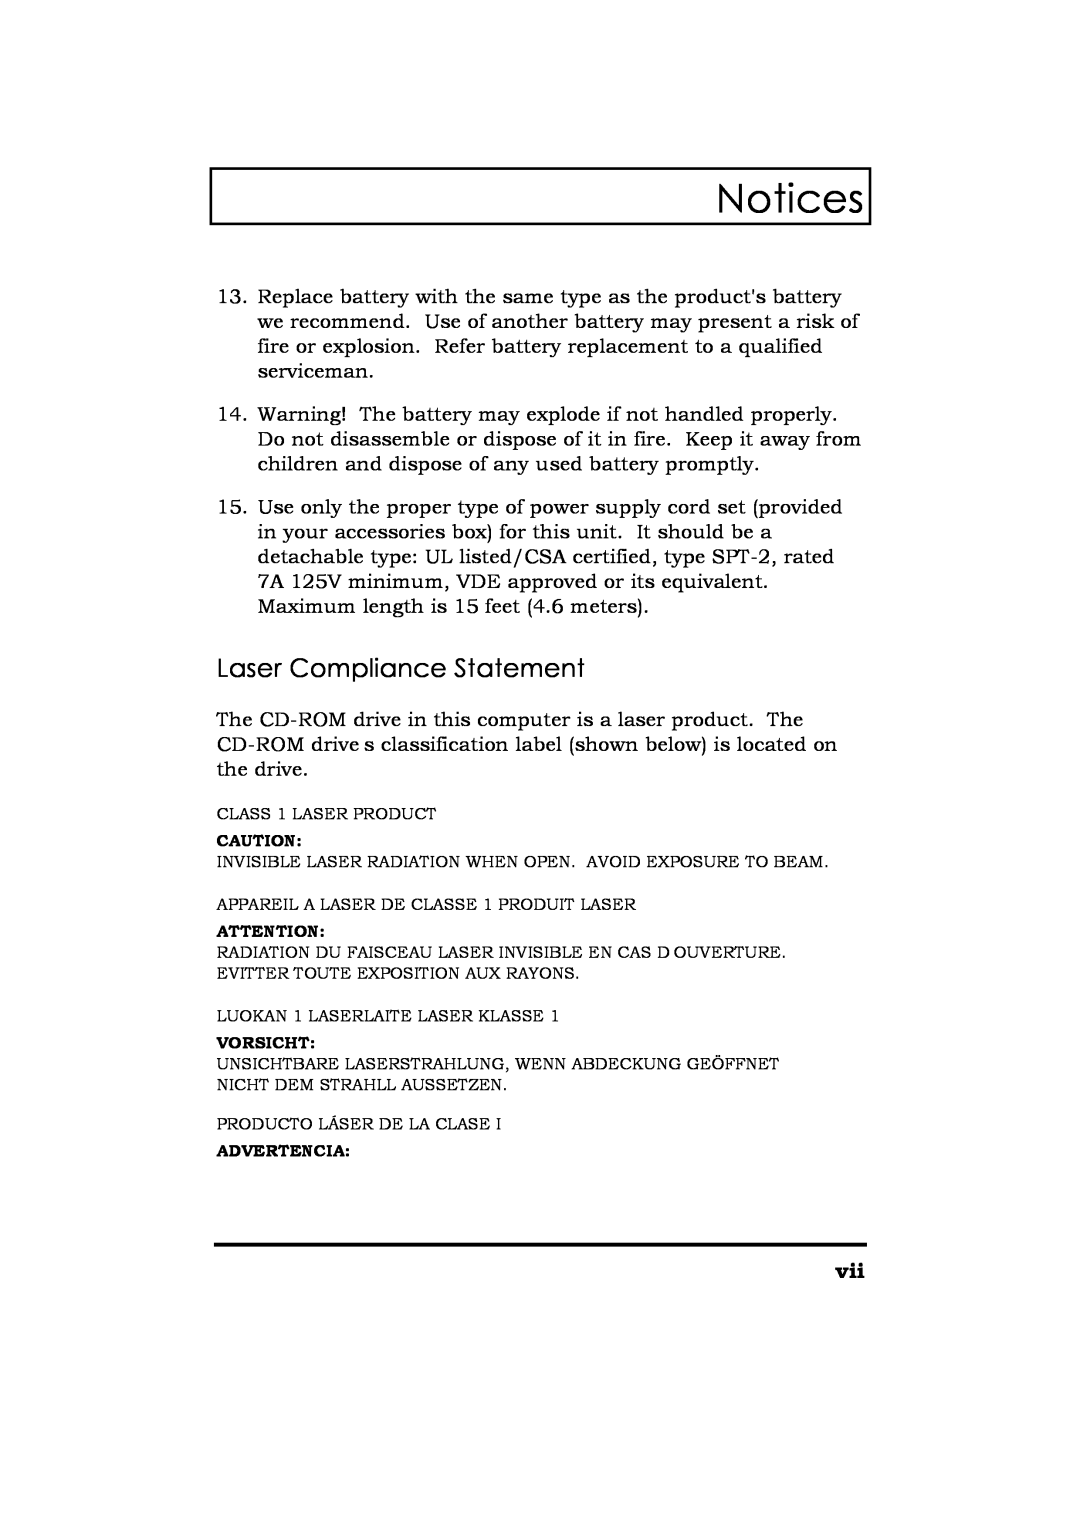 Acer Extensa 365 manual Laser Compliance Statement, Notices, Vorsicht, Advertencia 